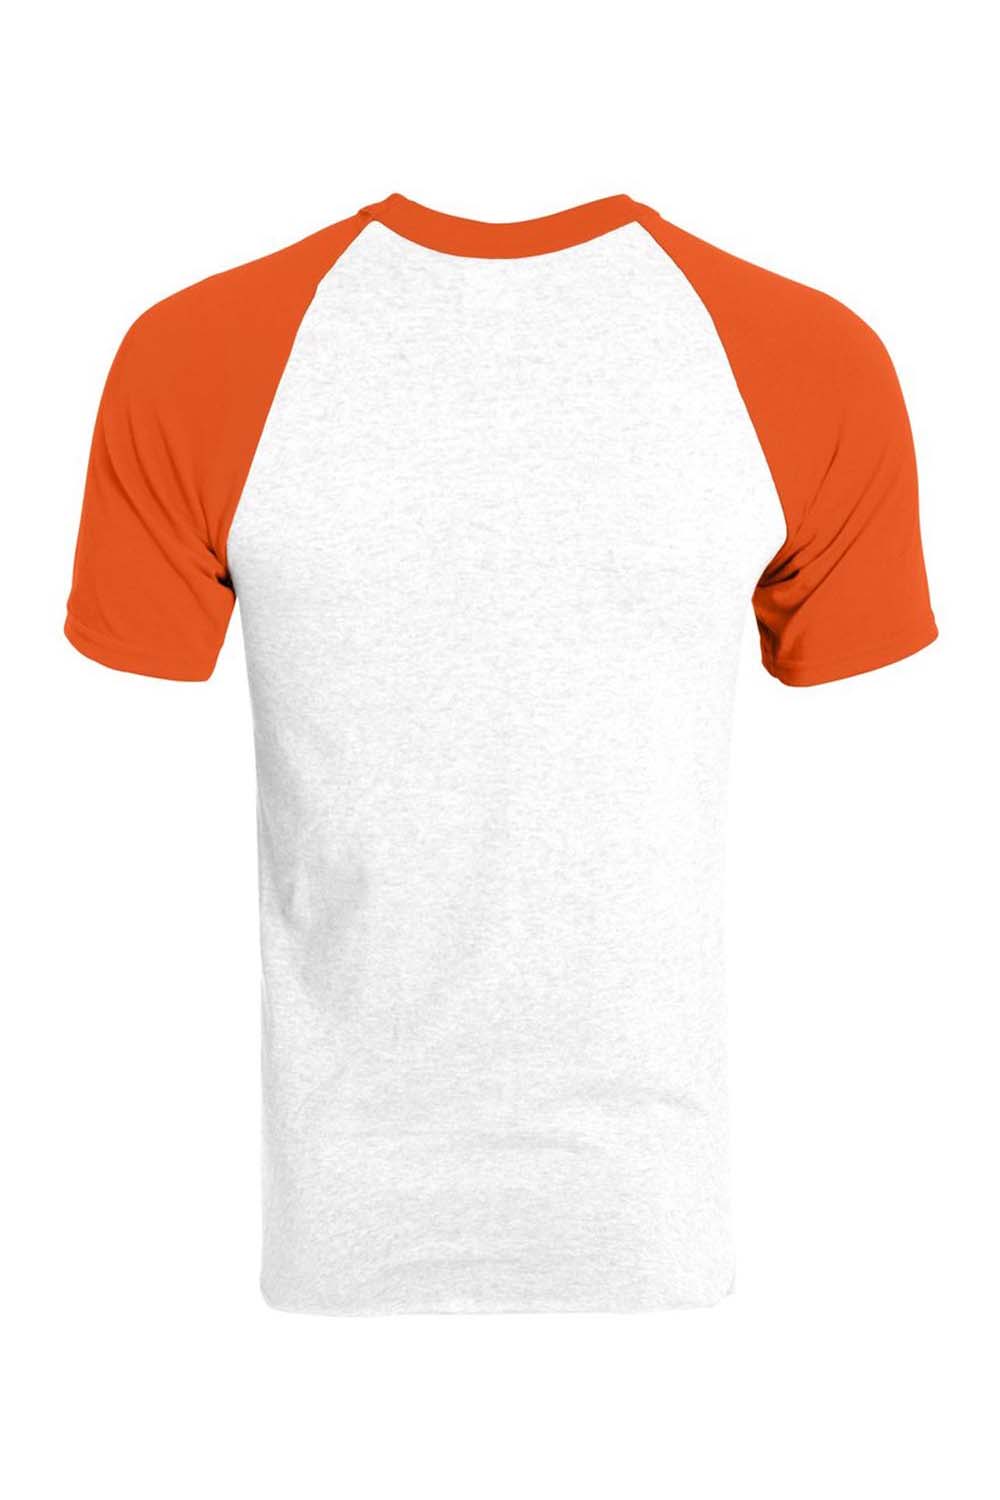 Augusta Sportswear 423 Mens Short Sleeve Crewneck T-Shirt White/Orange Model Flat Back